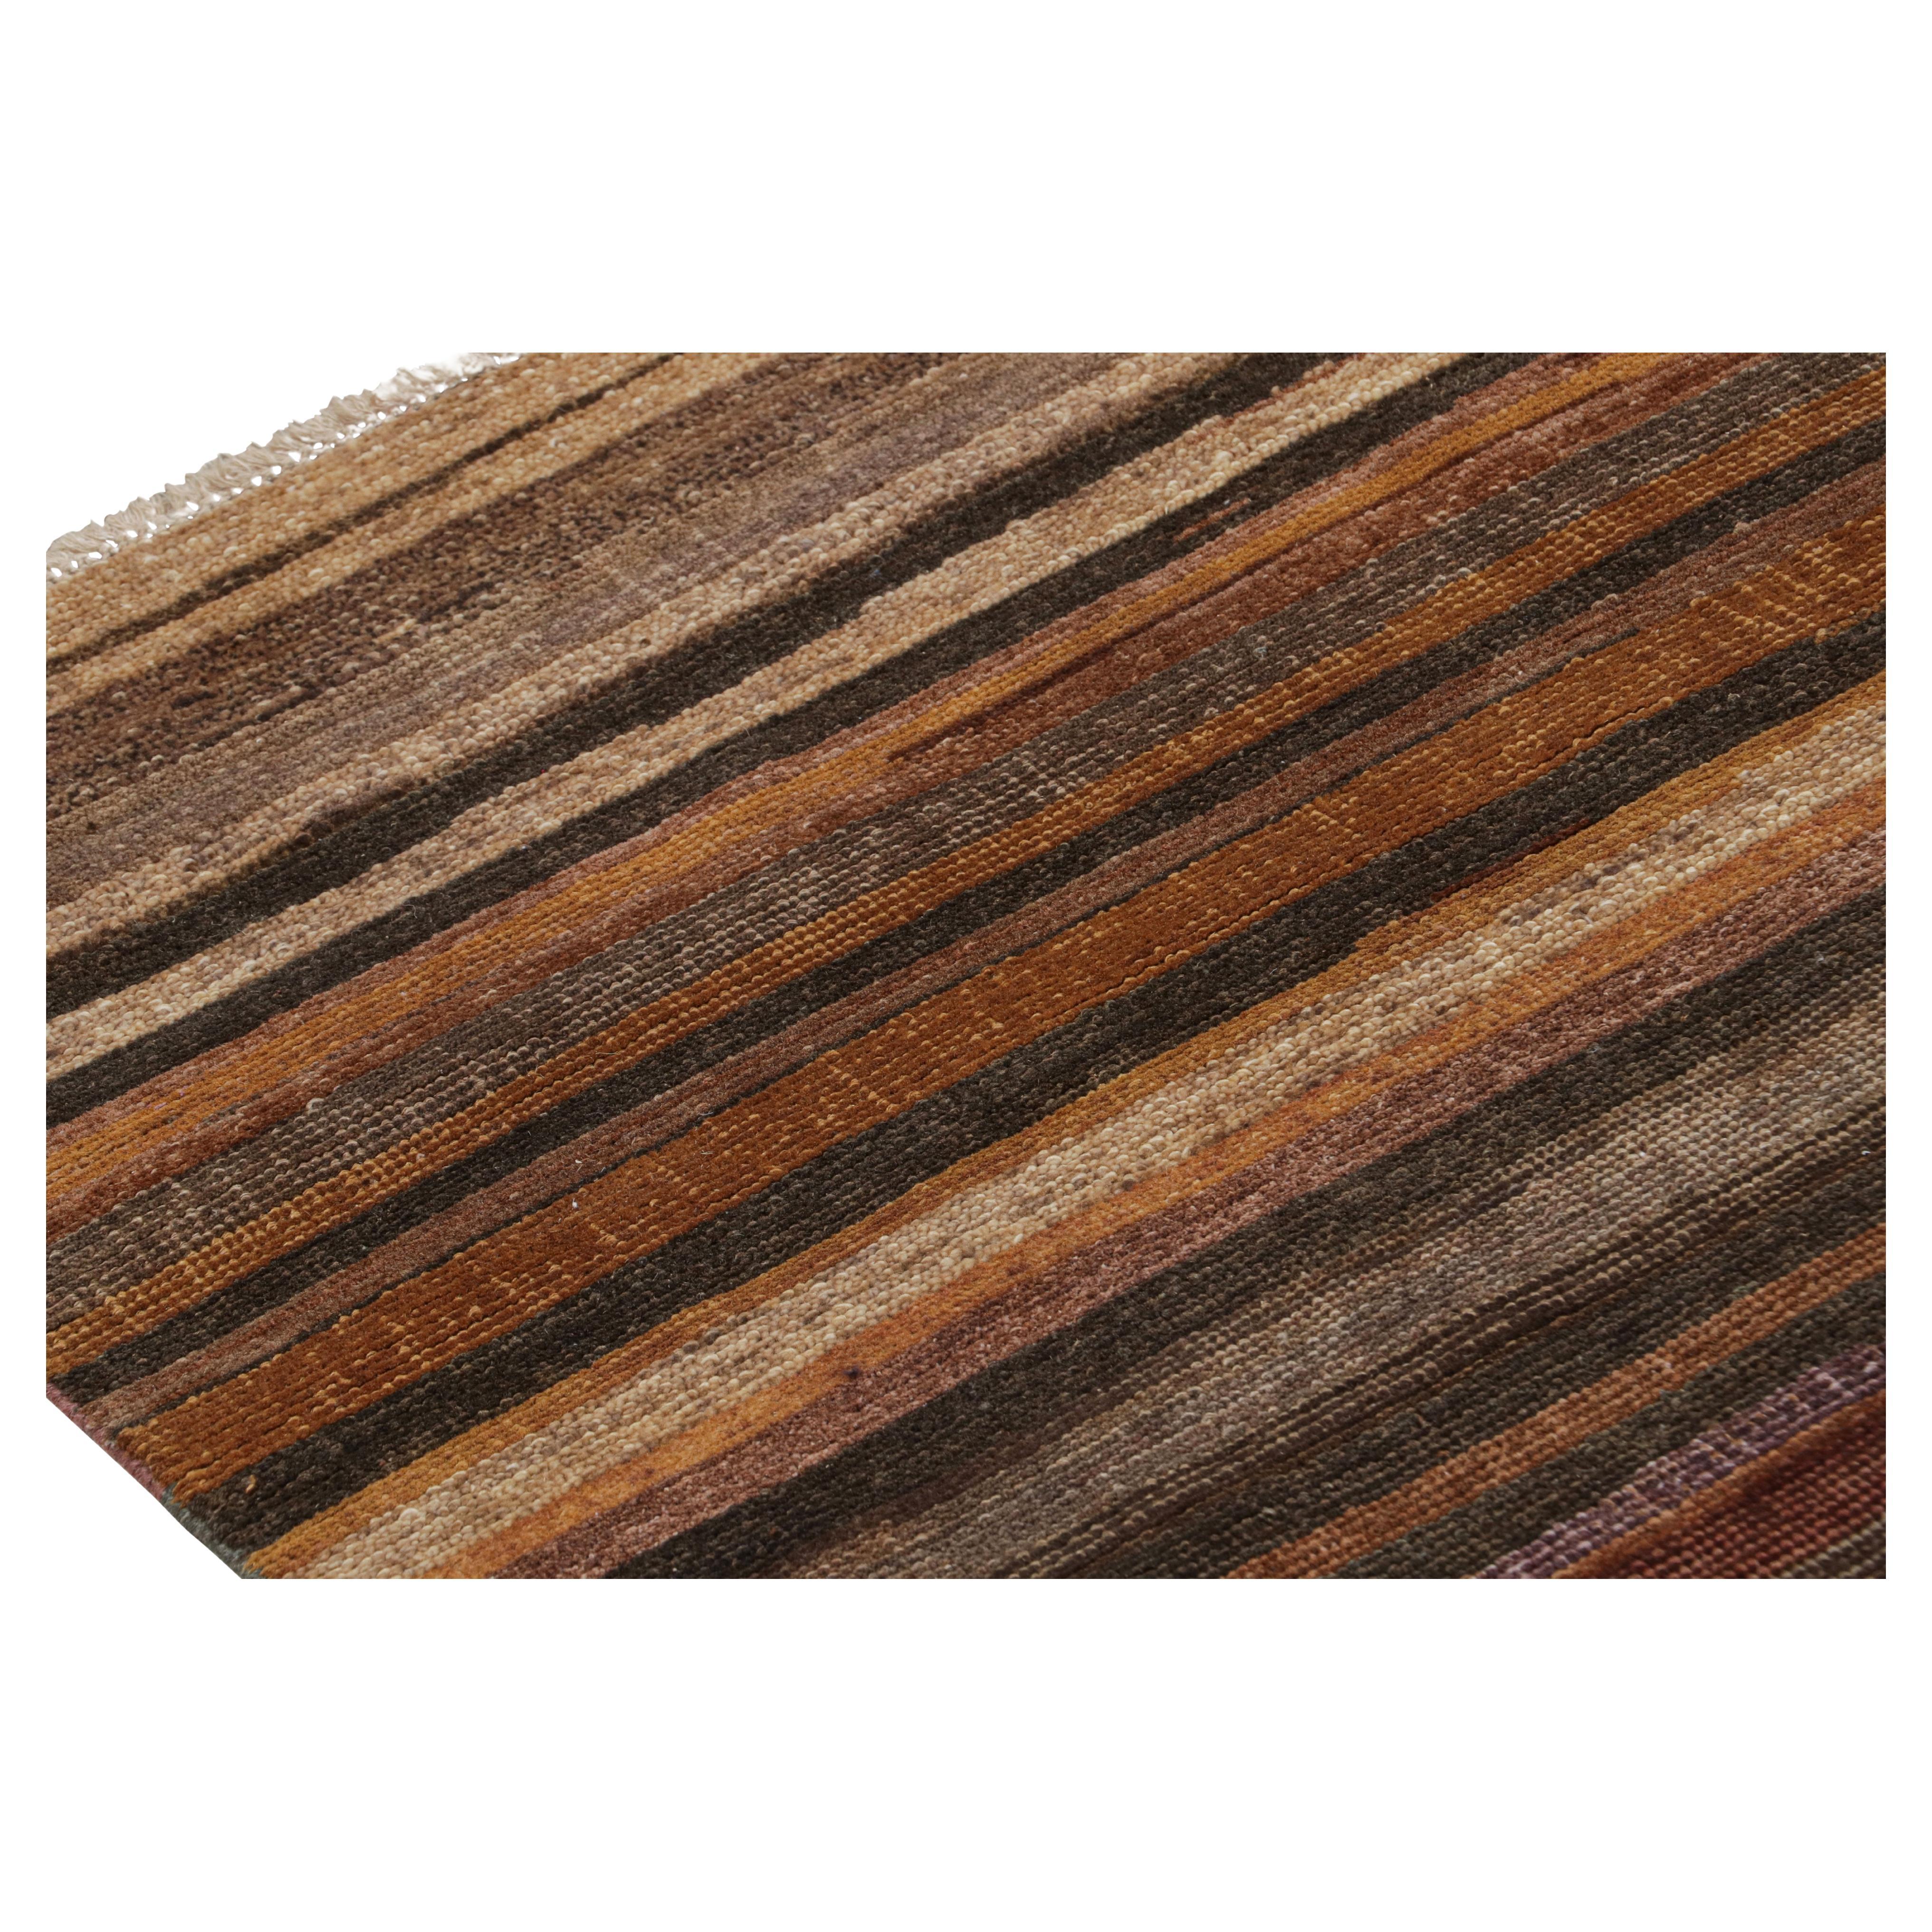 Rug & Kilim’s Textural Rug in Beige-Brown Stripes and Striae